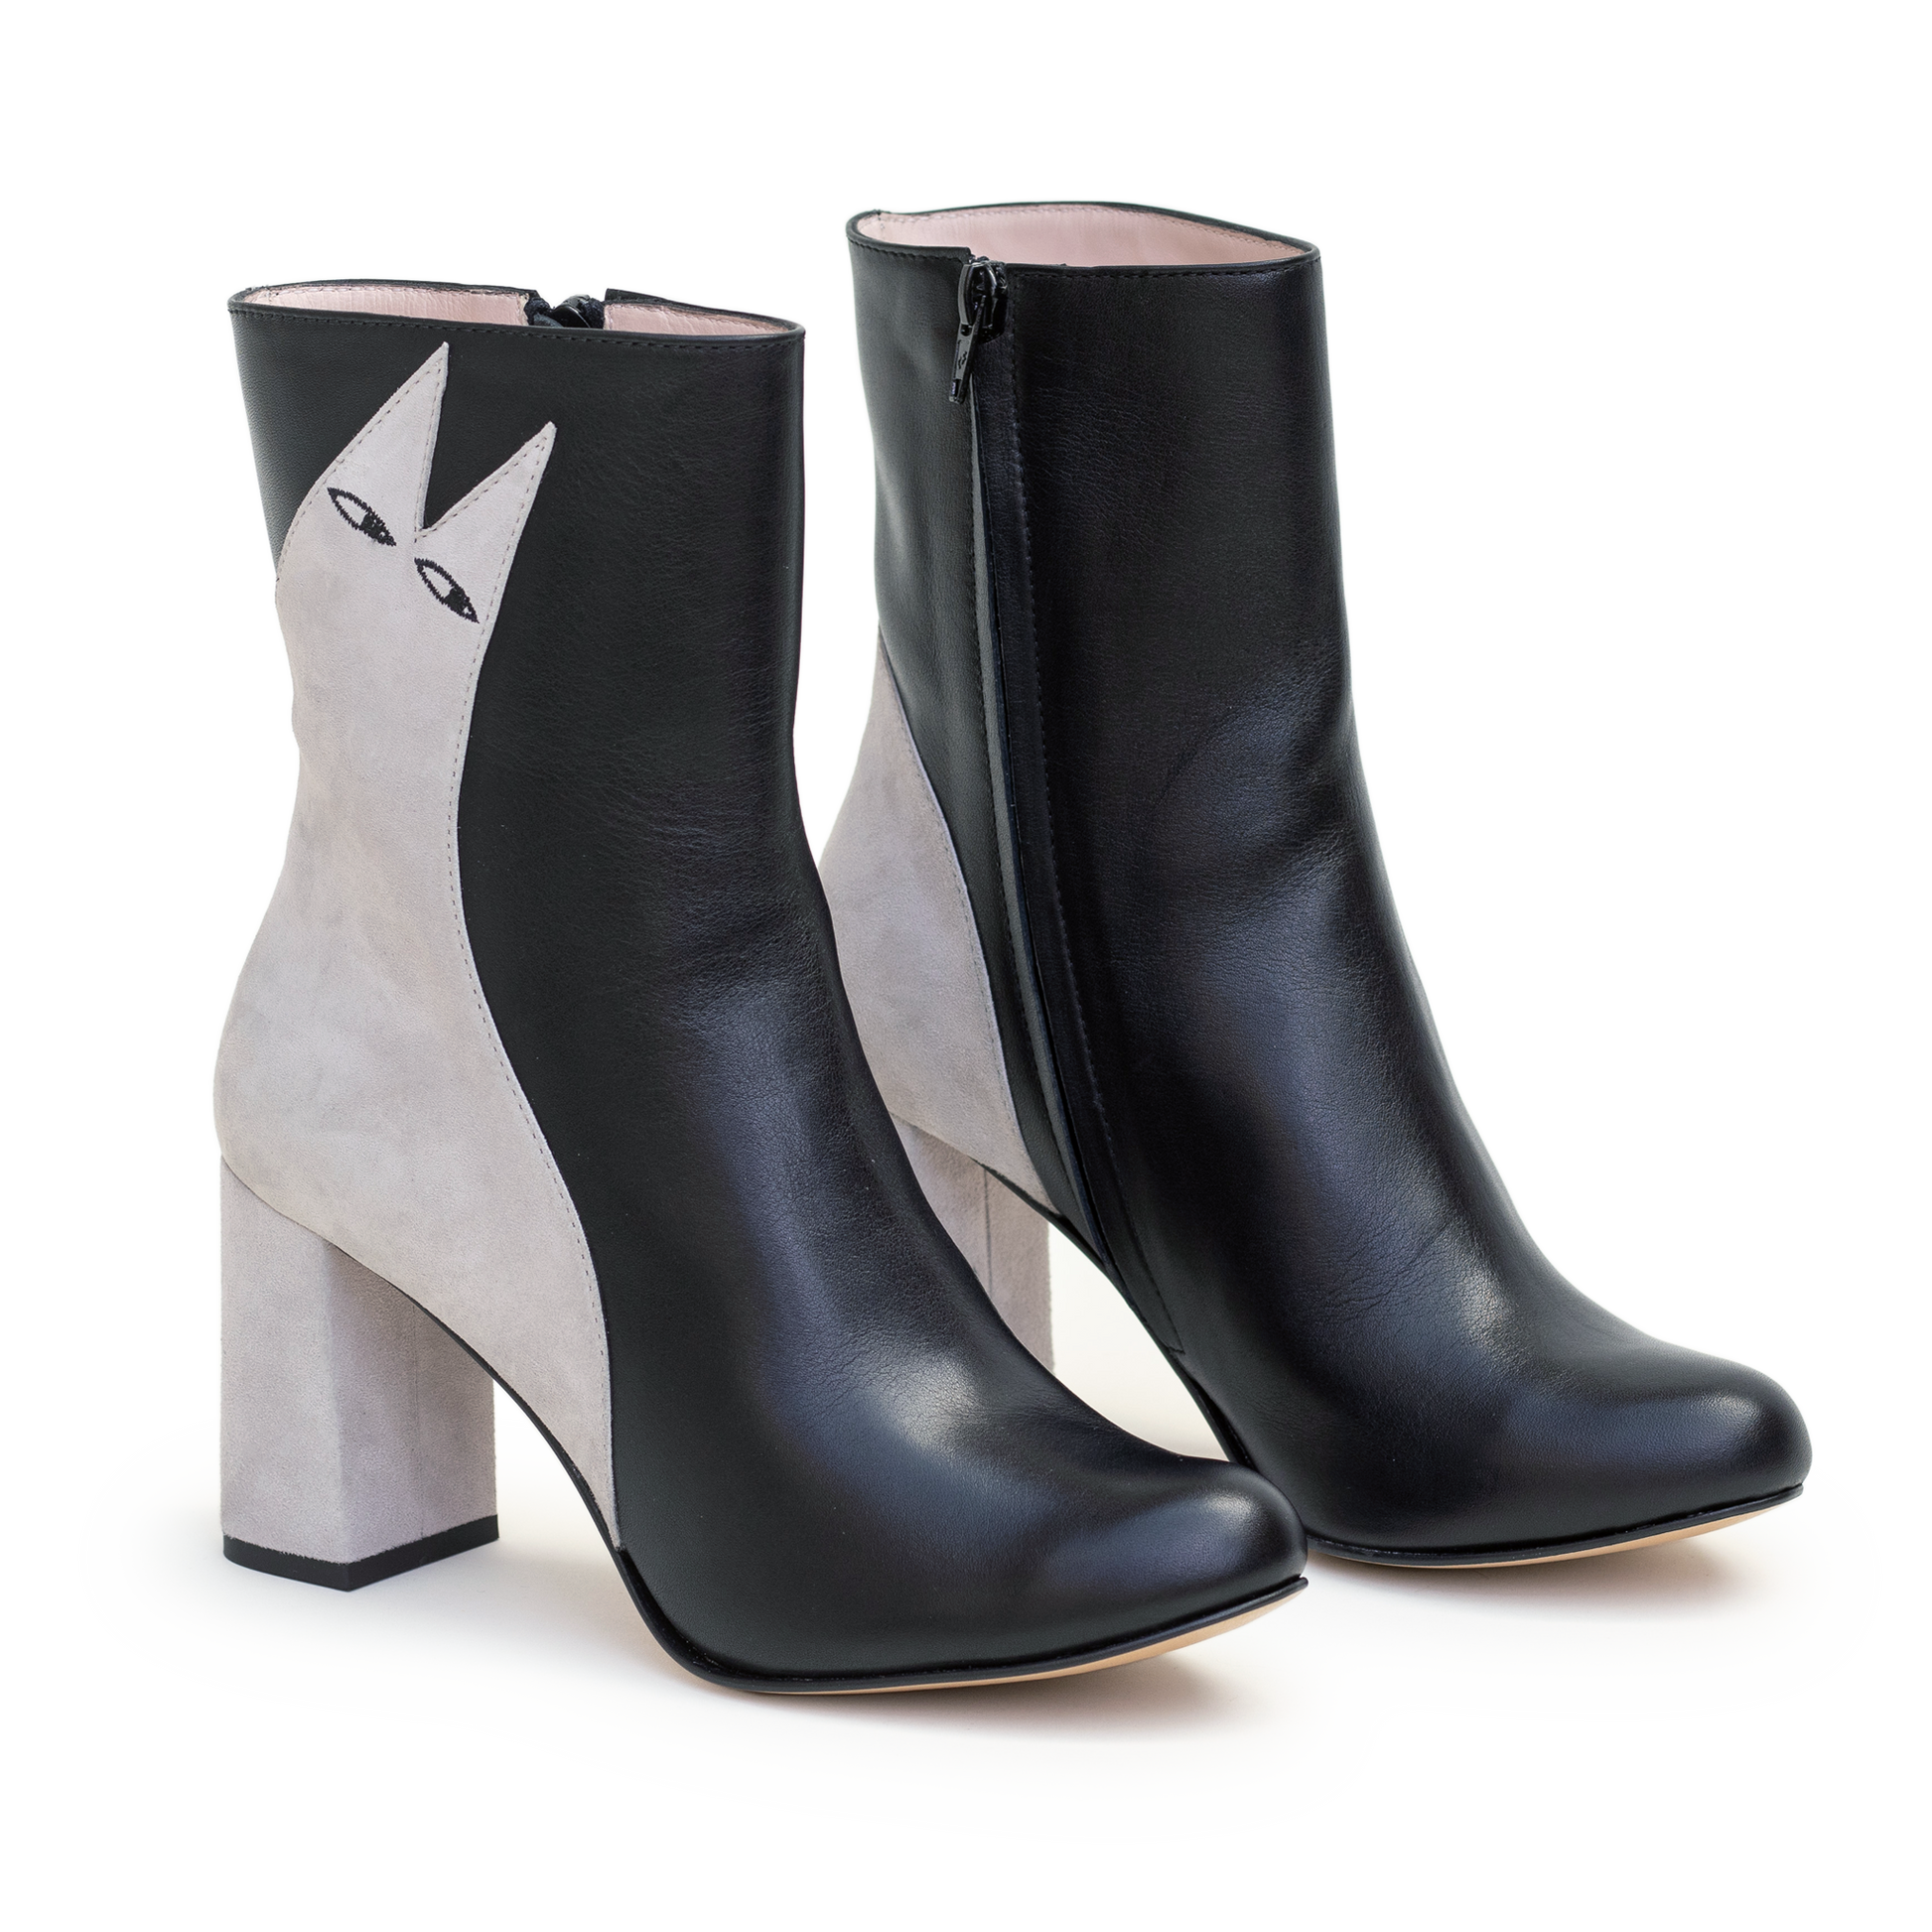 Etta cat boots Jocie Juritz Collection